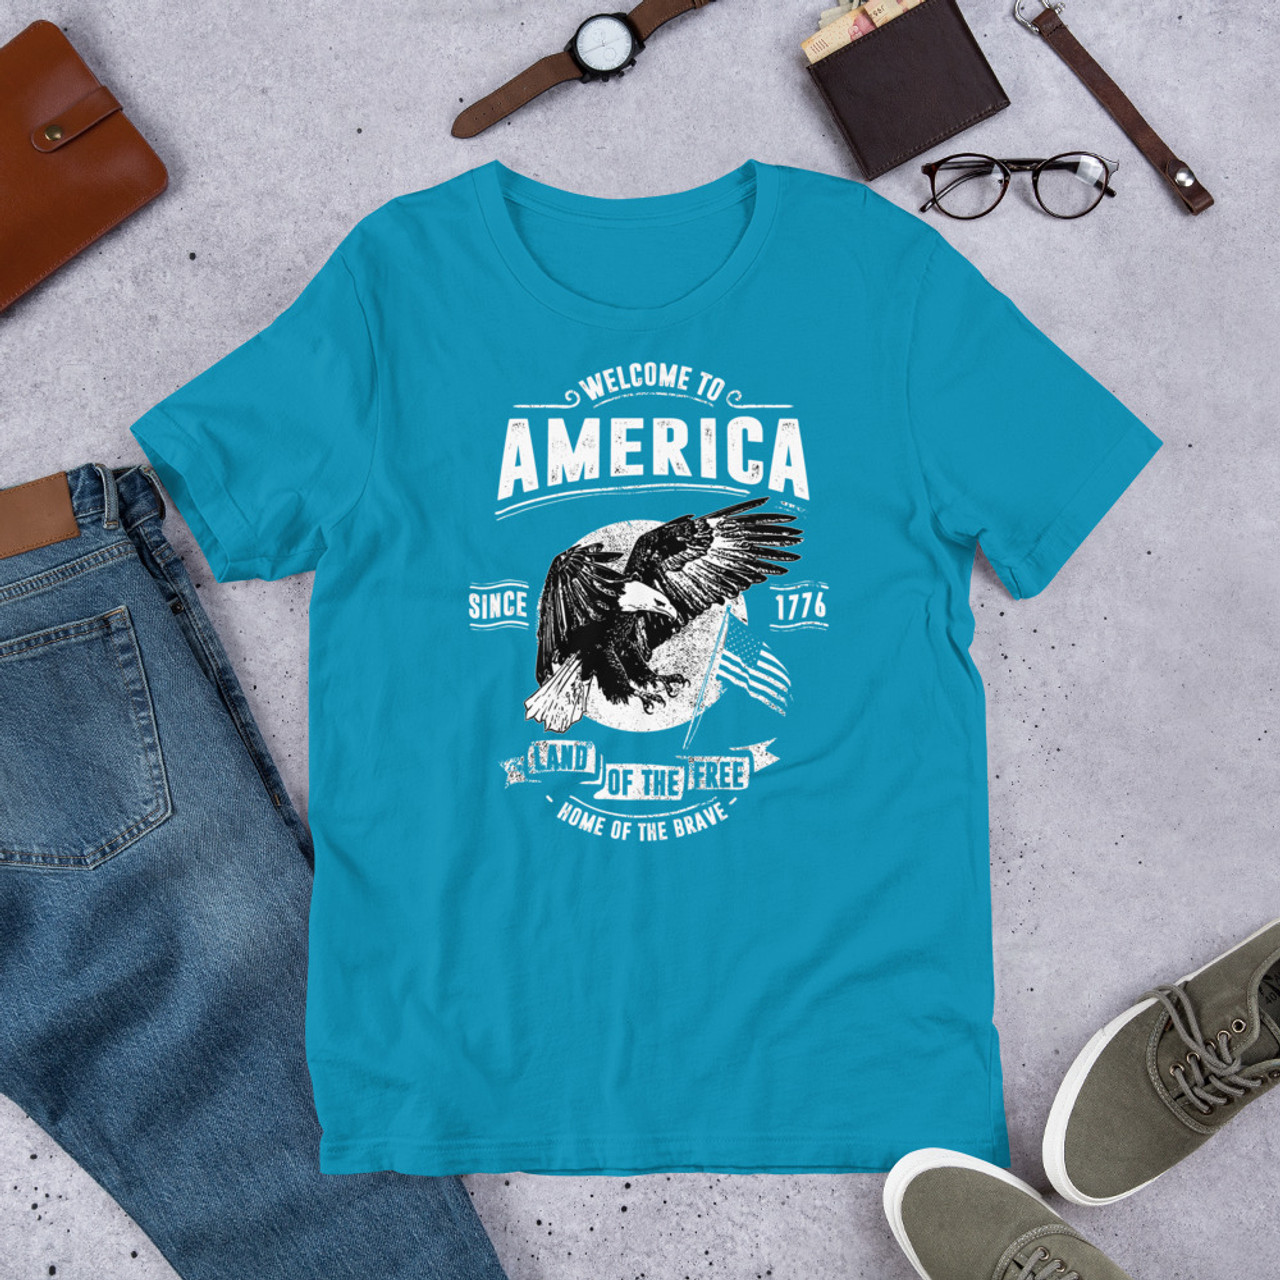 Aqua T-Shirt - Bella + Canvas 3001 Welcome to America